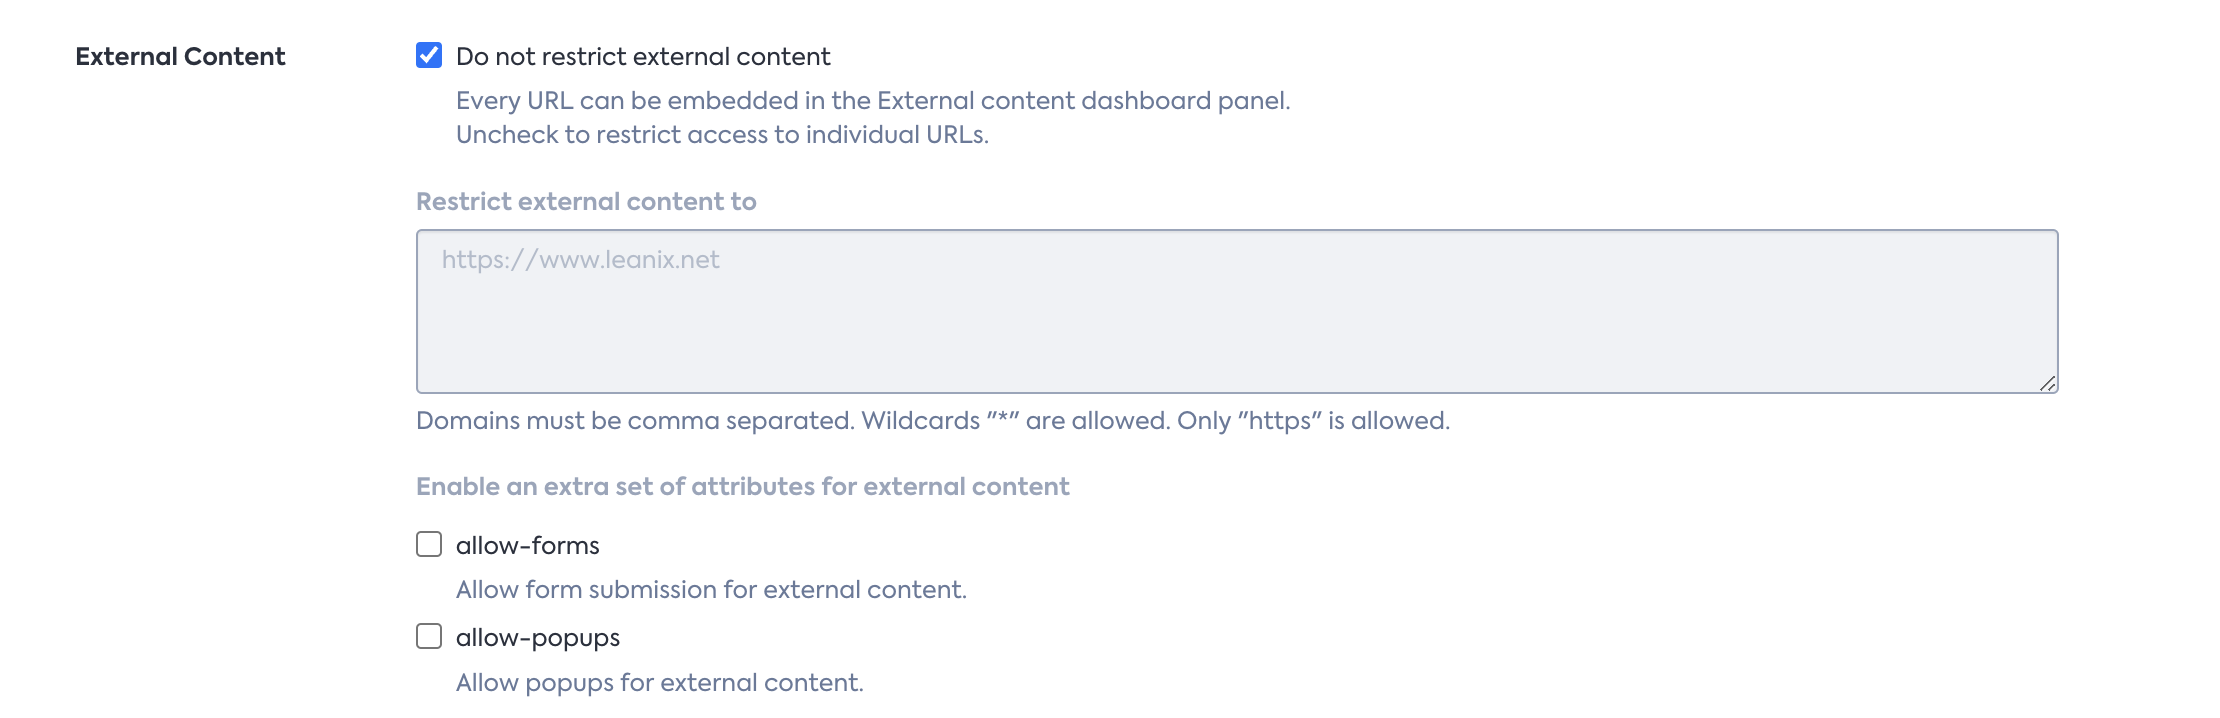 Restricting External URLs in the External Content Dashboard Panel